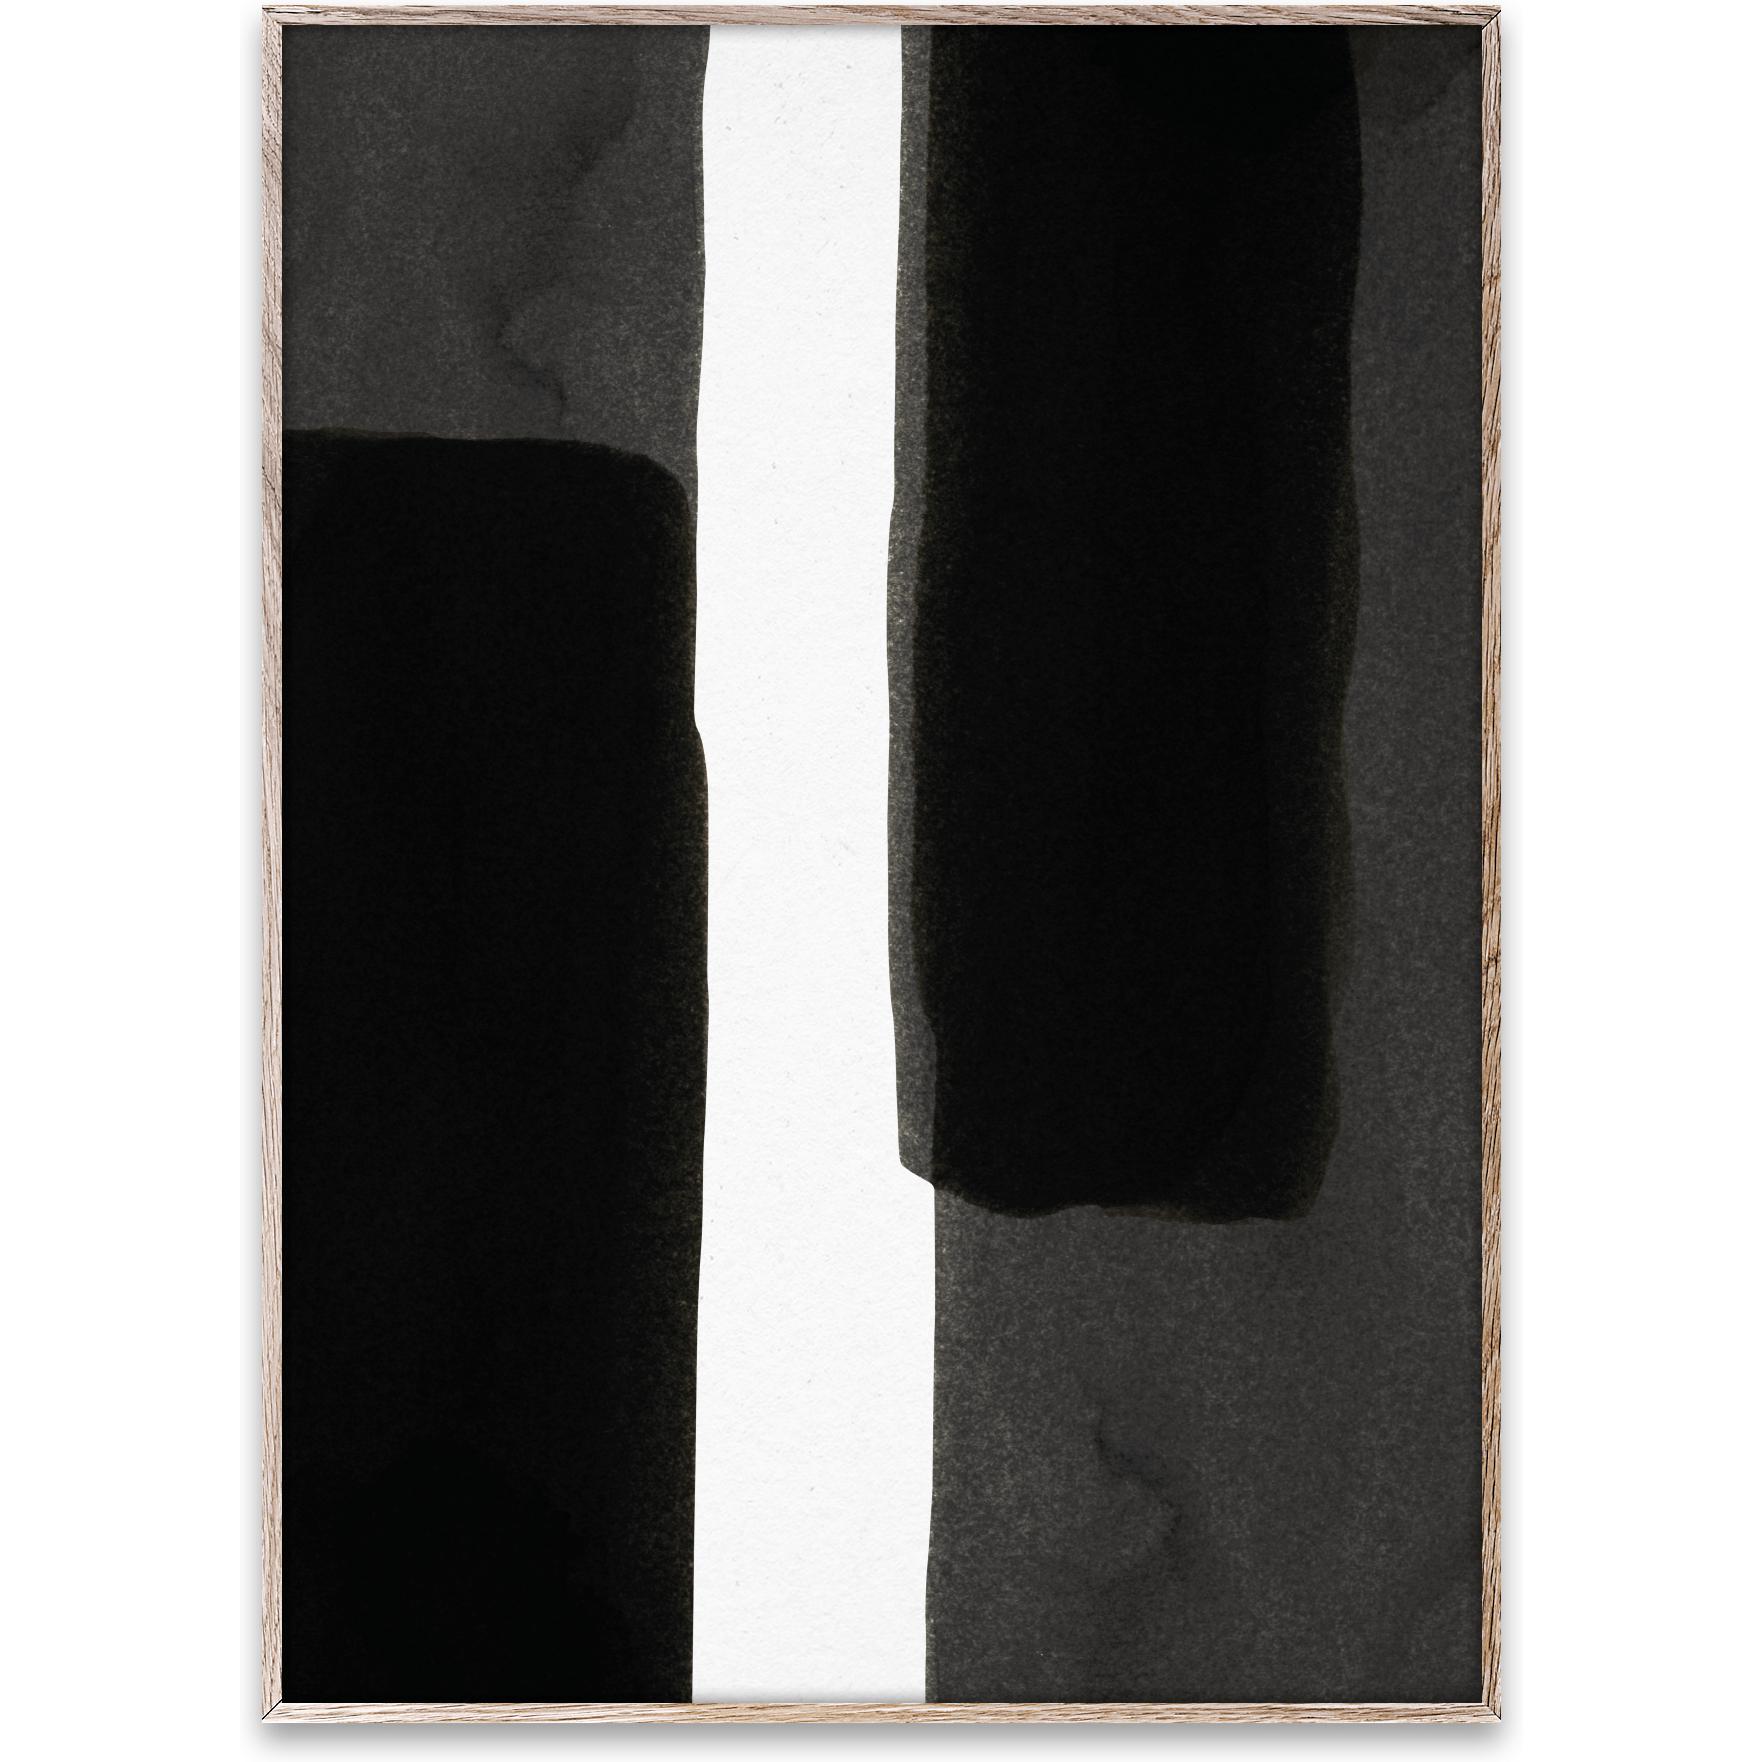 Paper Collective Enso -affisch 50x70 cm, svart i